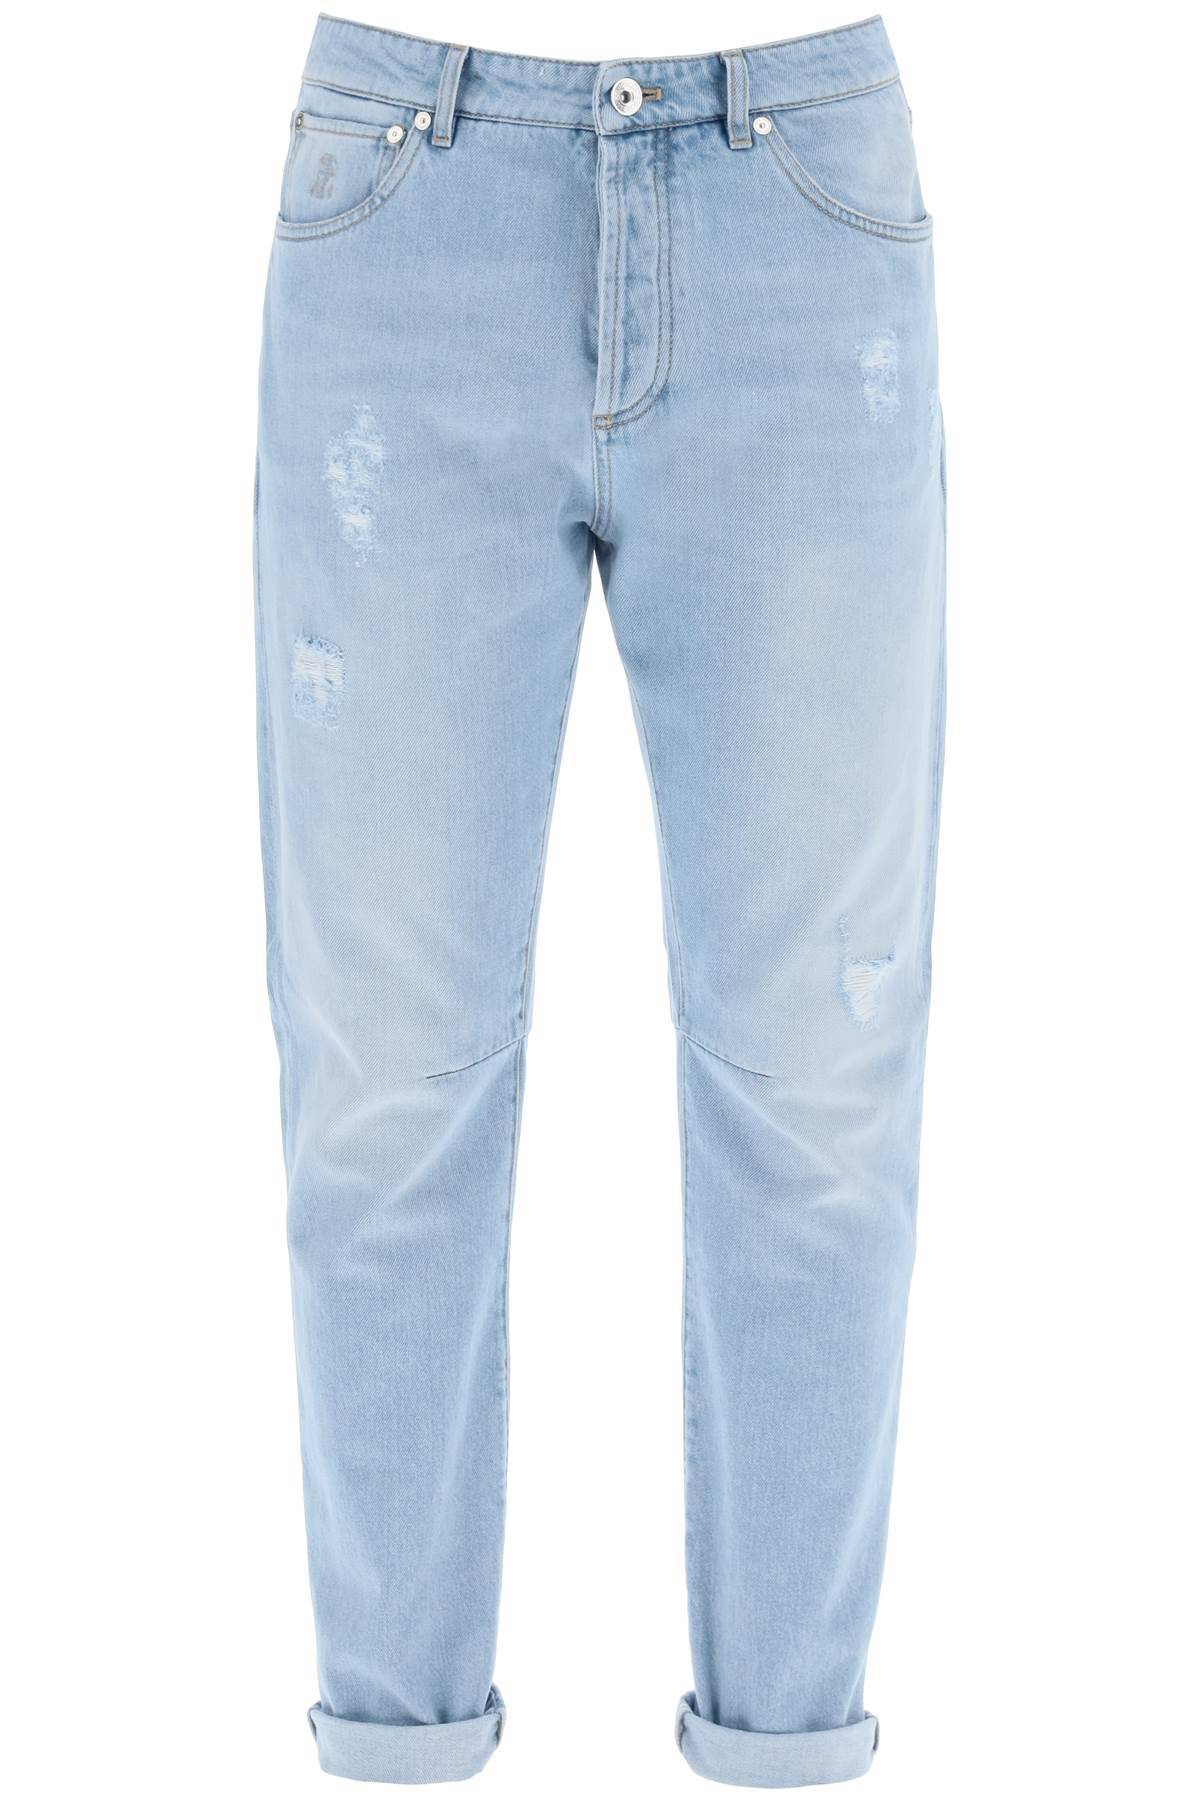 Brunello Cucinelli BRUNELLO CUCINELLI leisure fit jeans with tapered cut